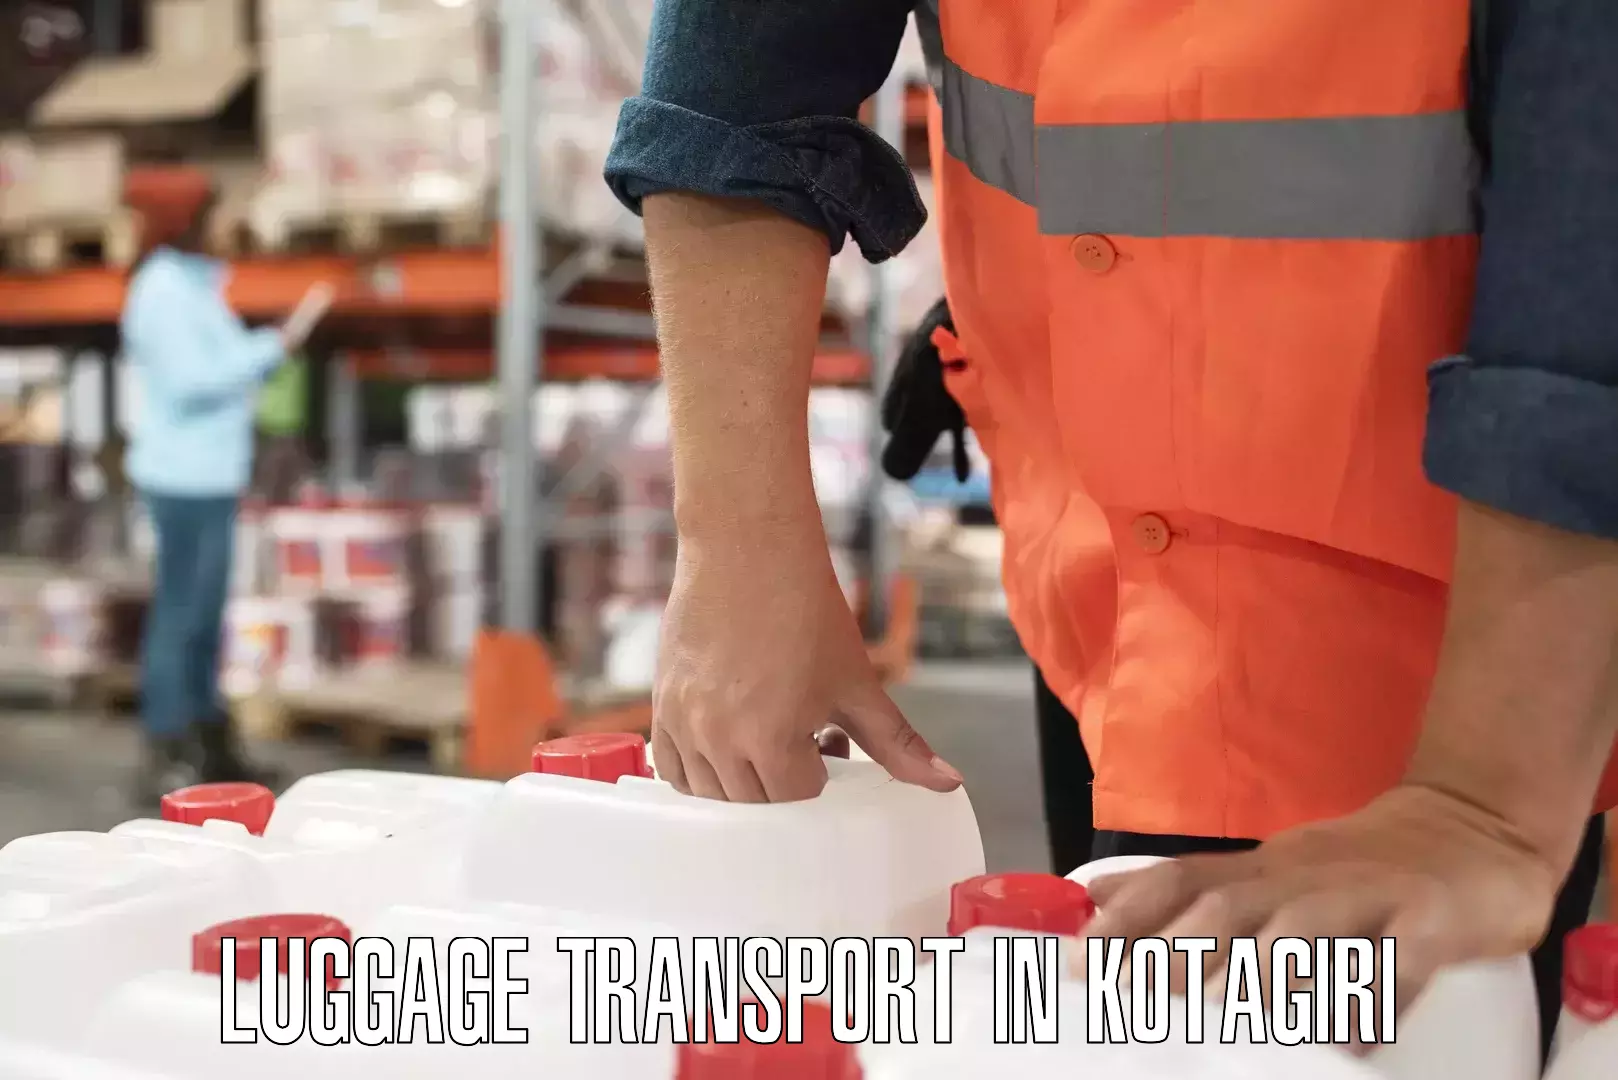 Excess baggage transport in Kotagiri